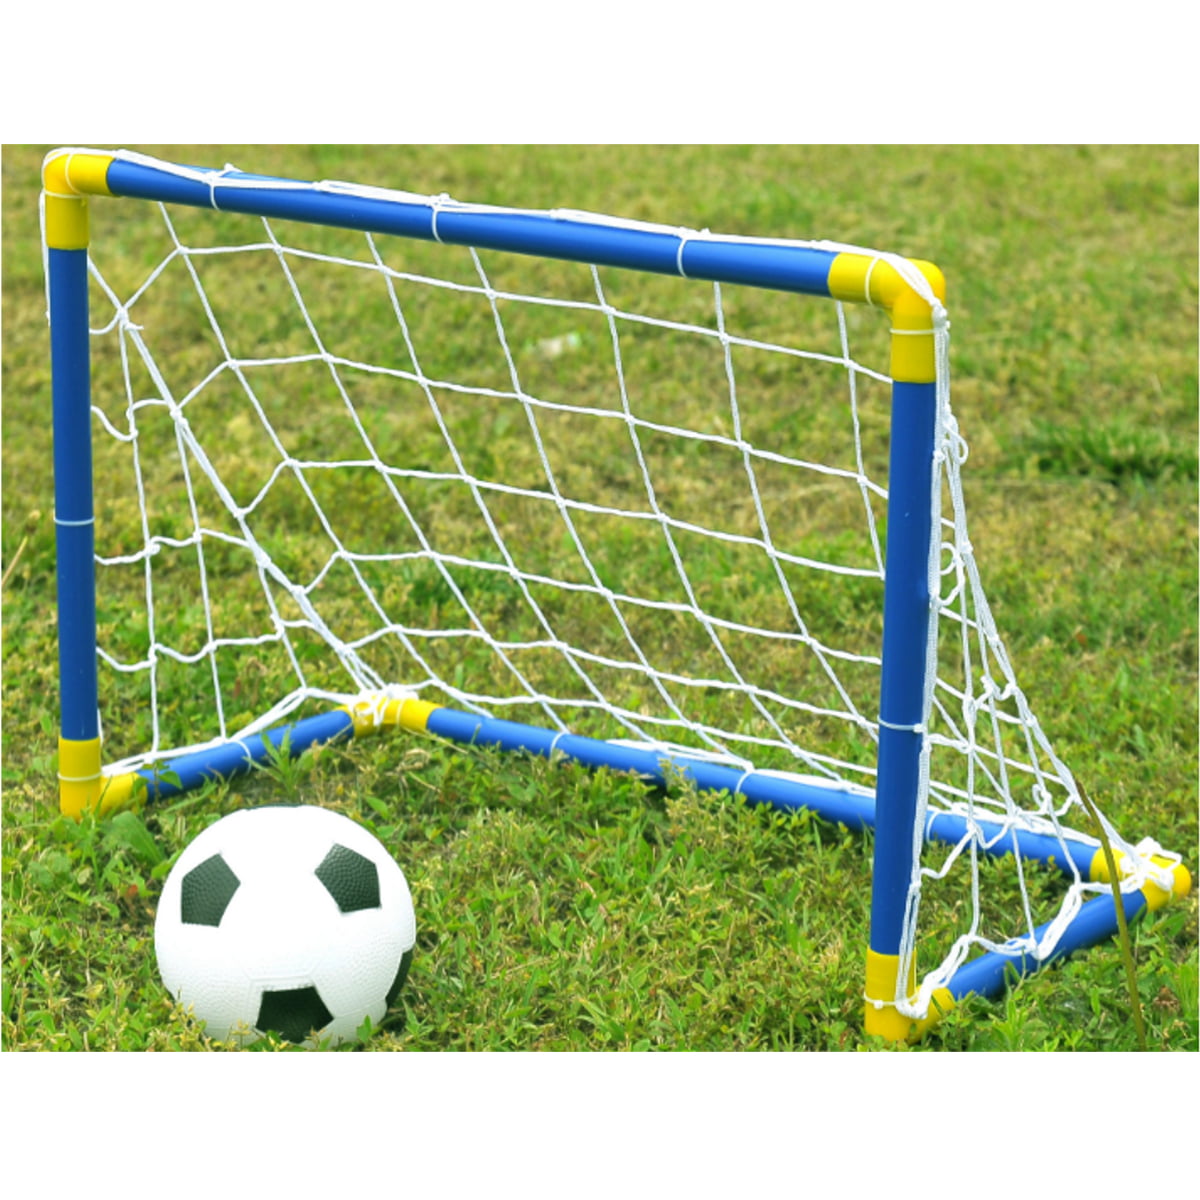 Mini Football Soccer Goal Post Net Set with Pump Indoor Outdoor Kids Sport Toy 